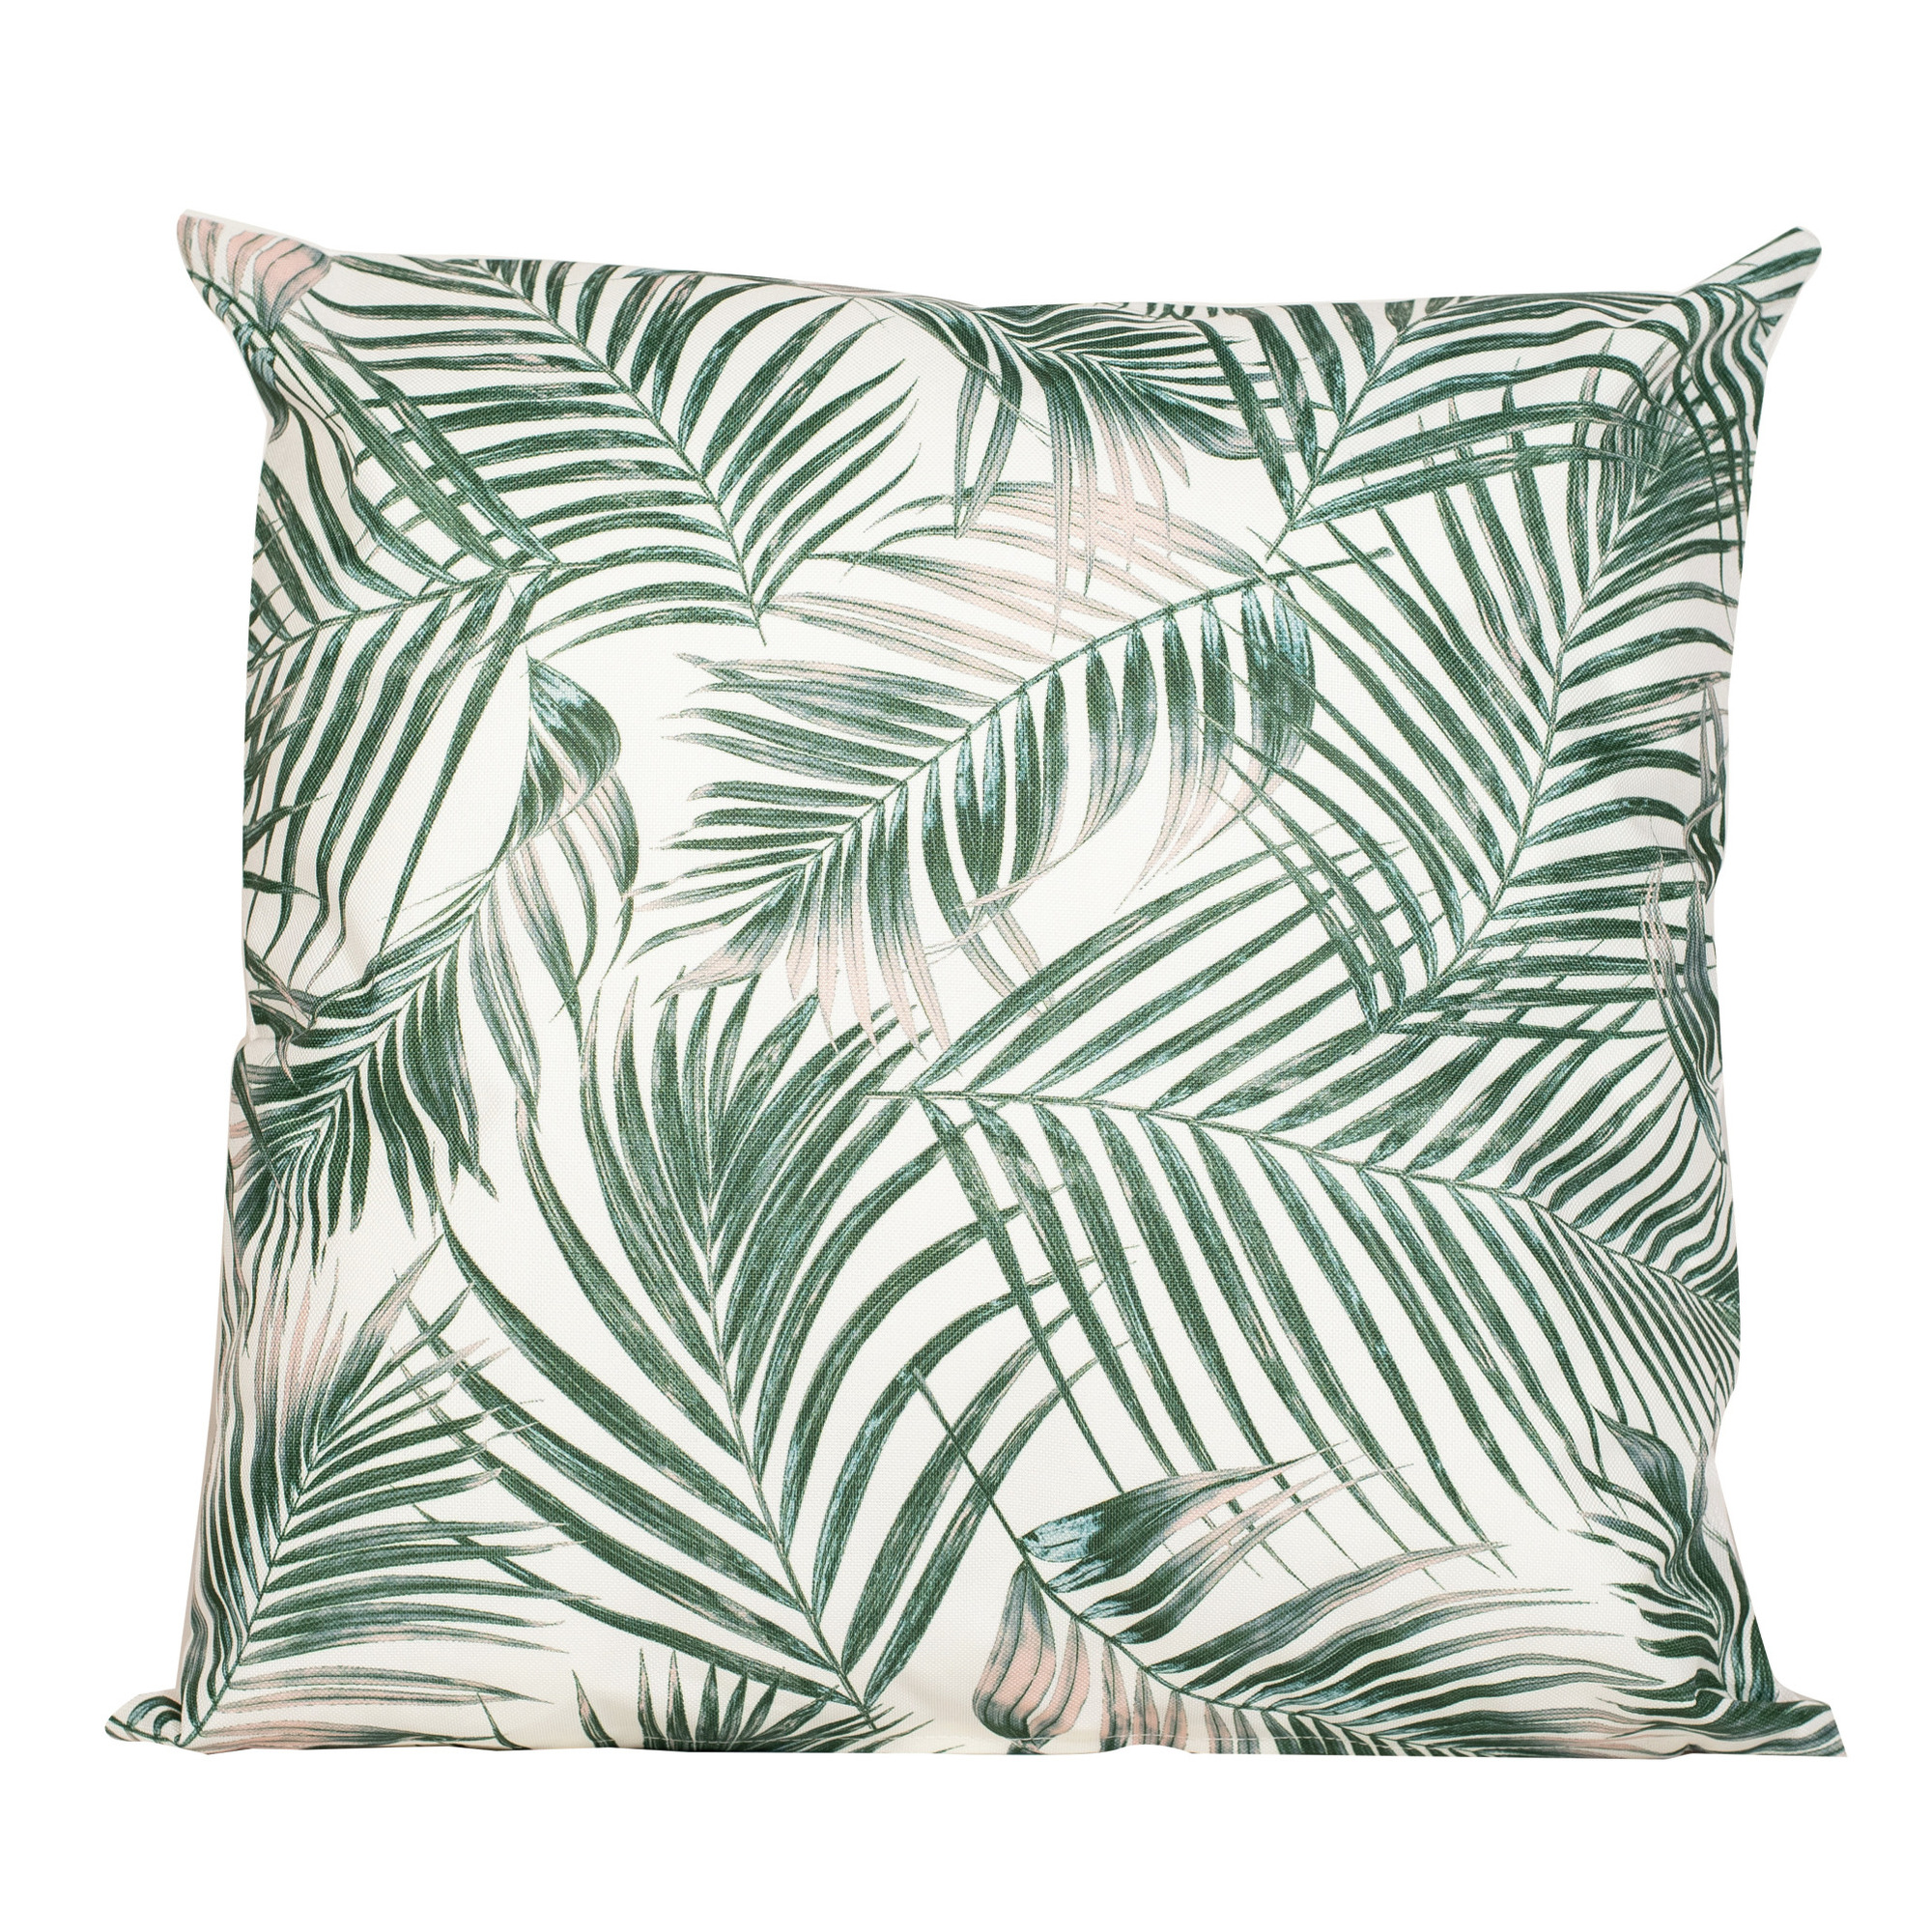 Anna's collection buitenkussen palm wit-groen 60 x 60 cm